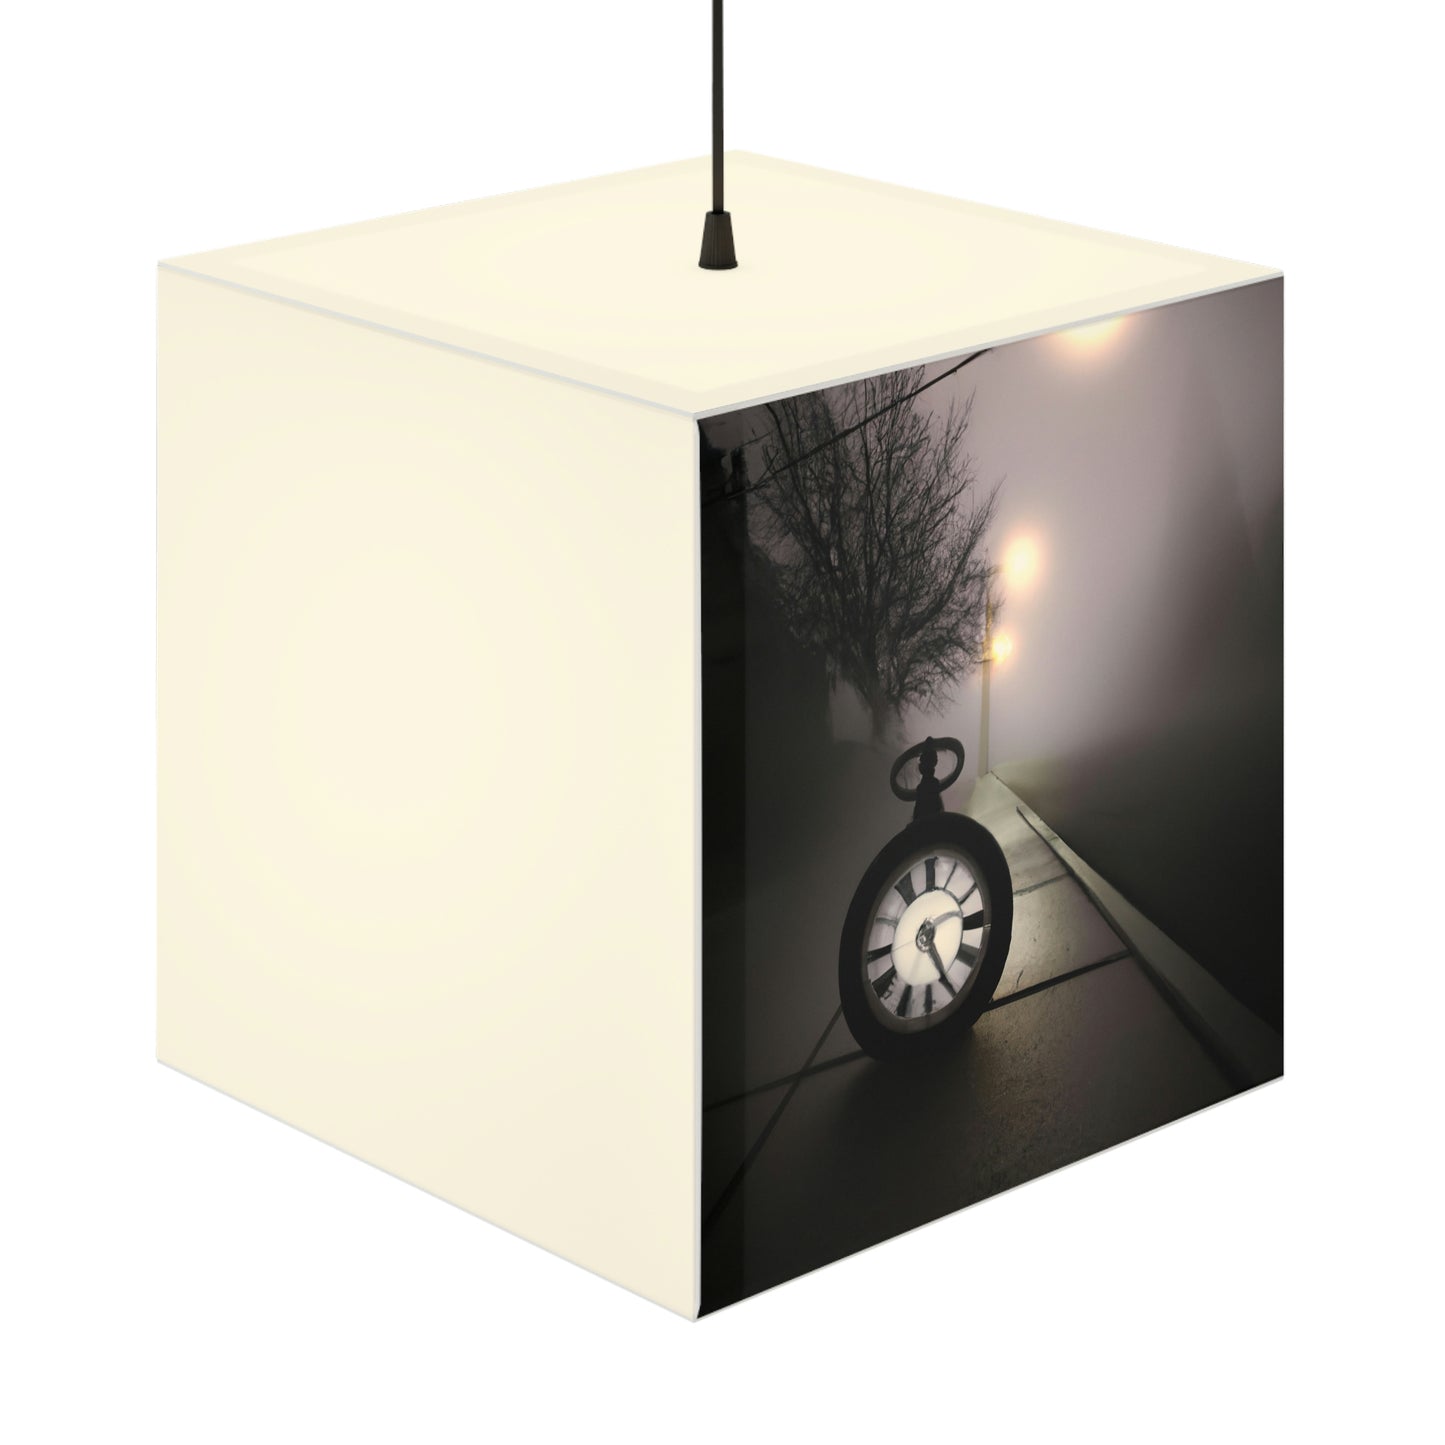 "The Lonely Clock on Foggy Lane" - The Alien Light Cube Lamp